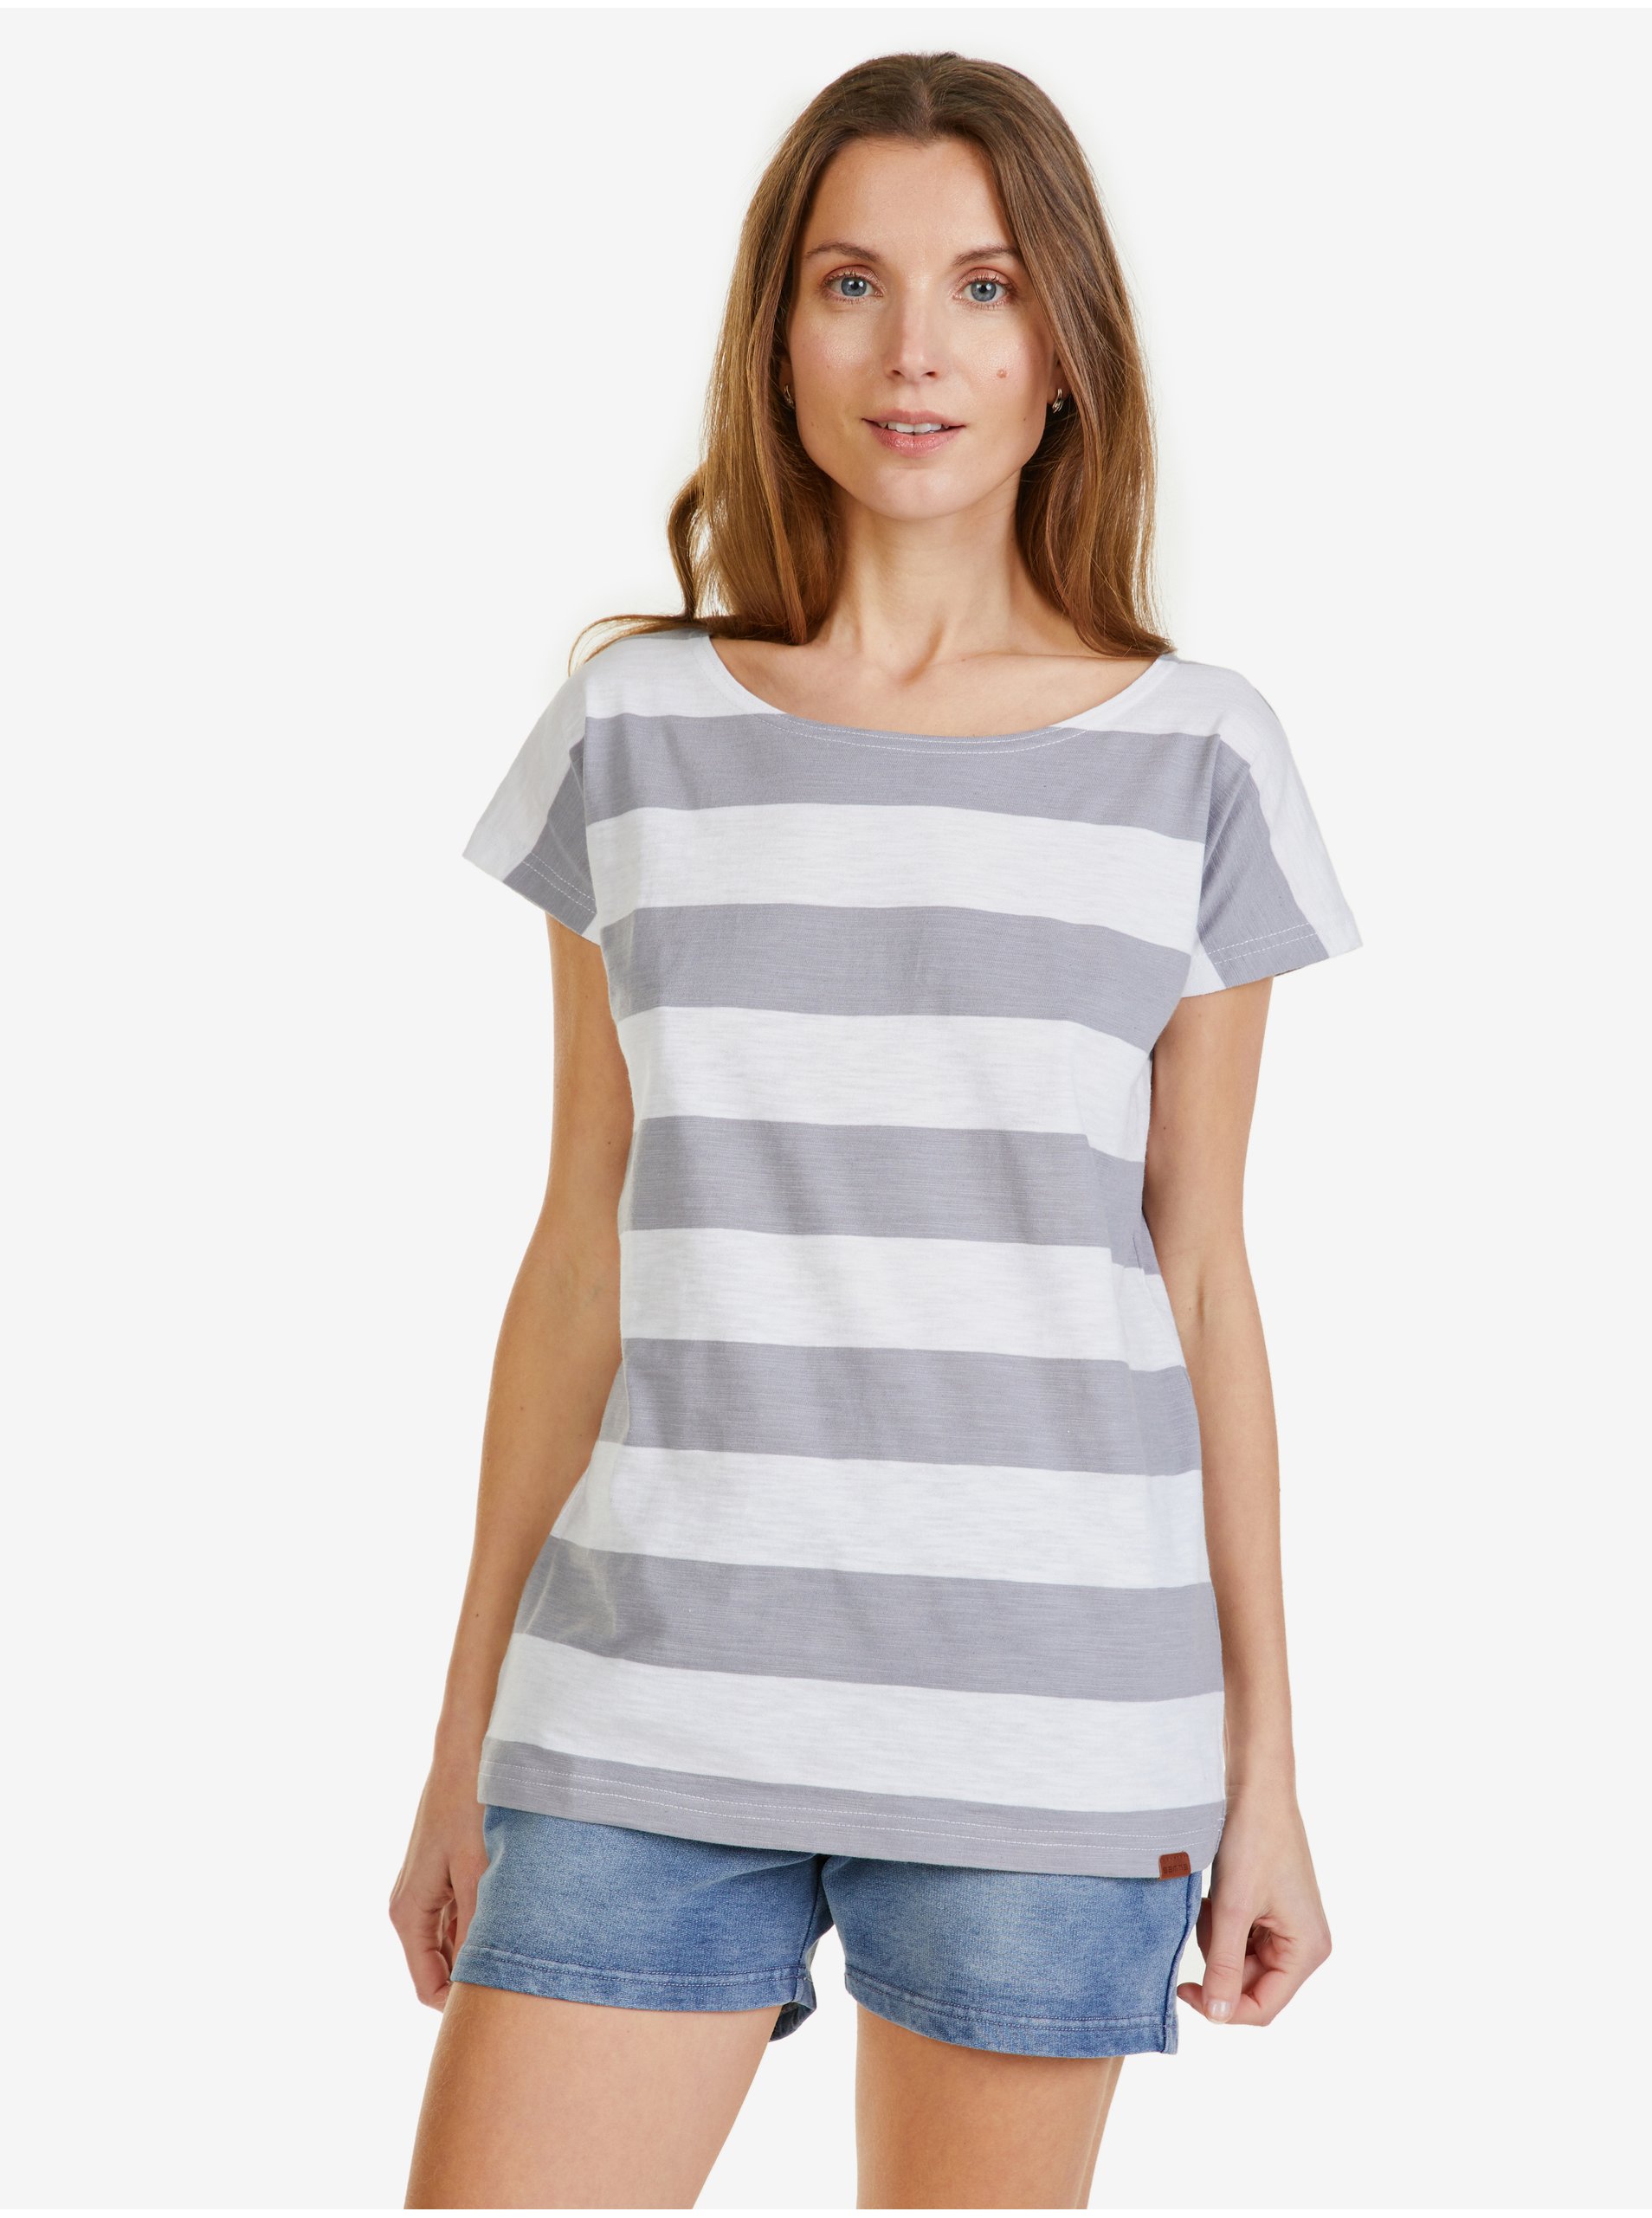 E-shop Bílo-šedé dámské pruhované tričko SAM 73 Elspeth